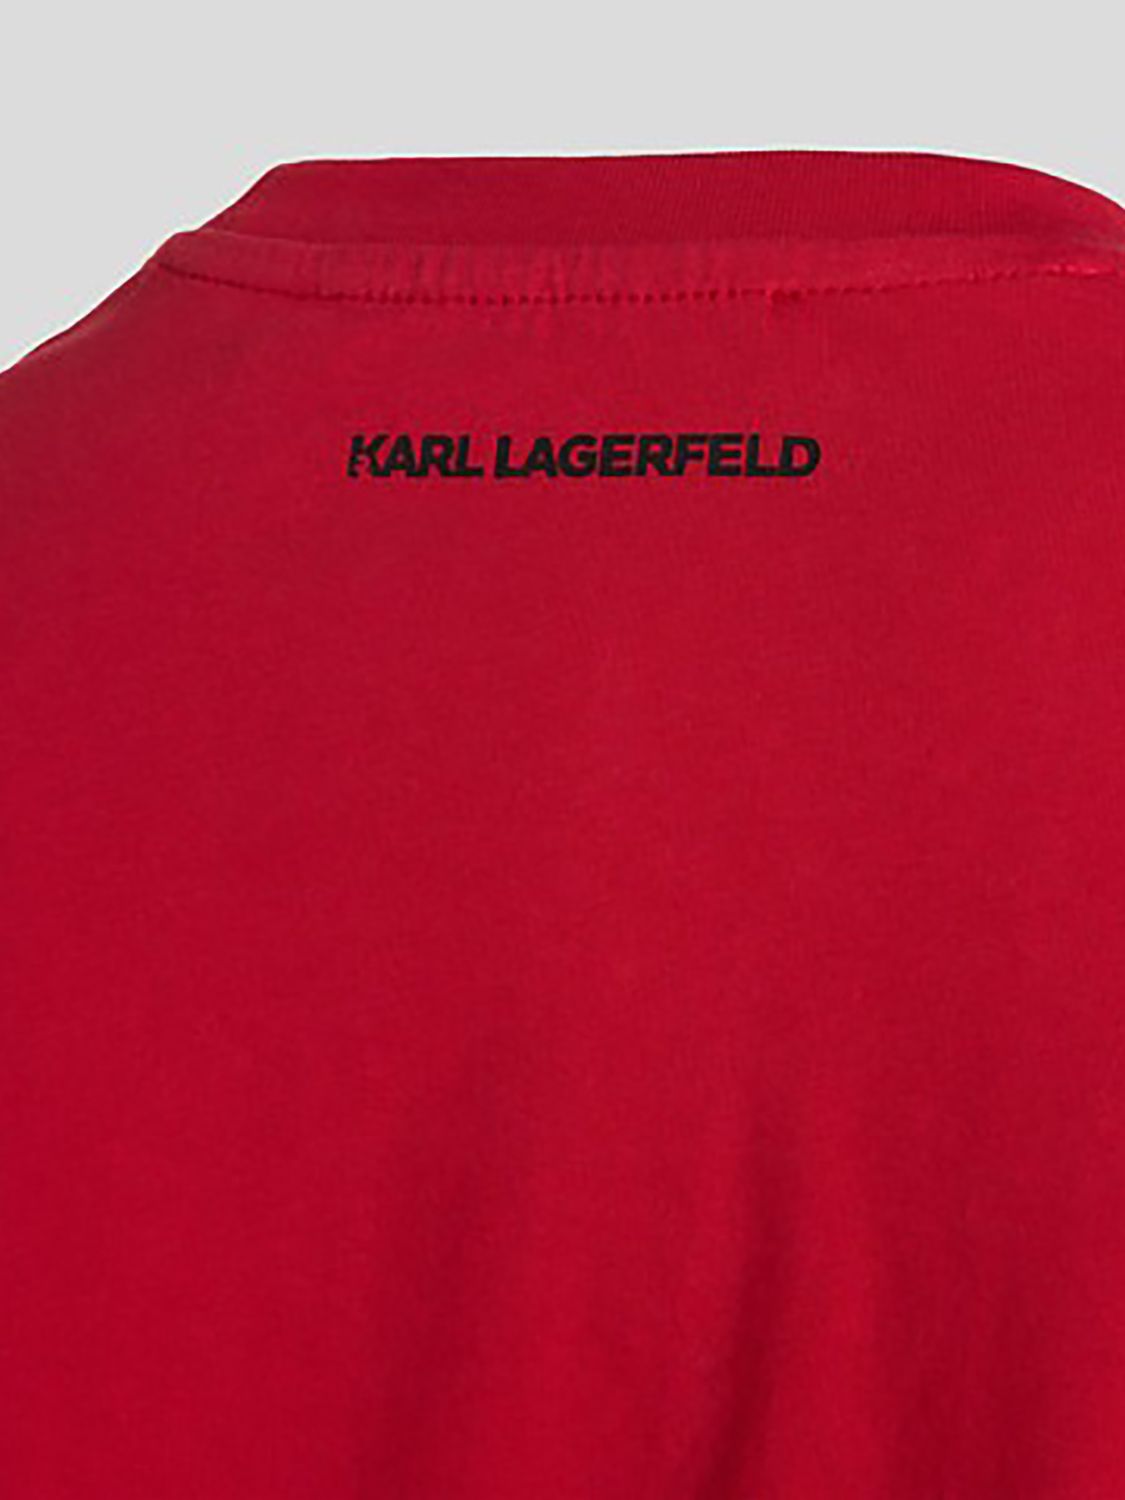 Buy KARL LAGERFELD Rhinestone Logo T-Shirt Online at johnlewis.com